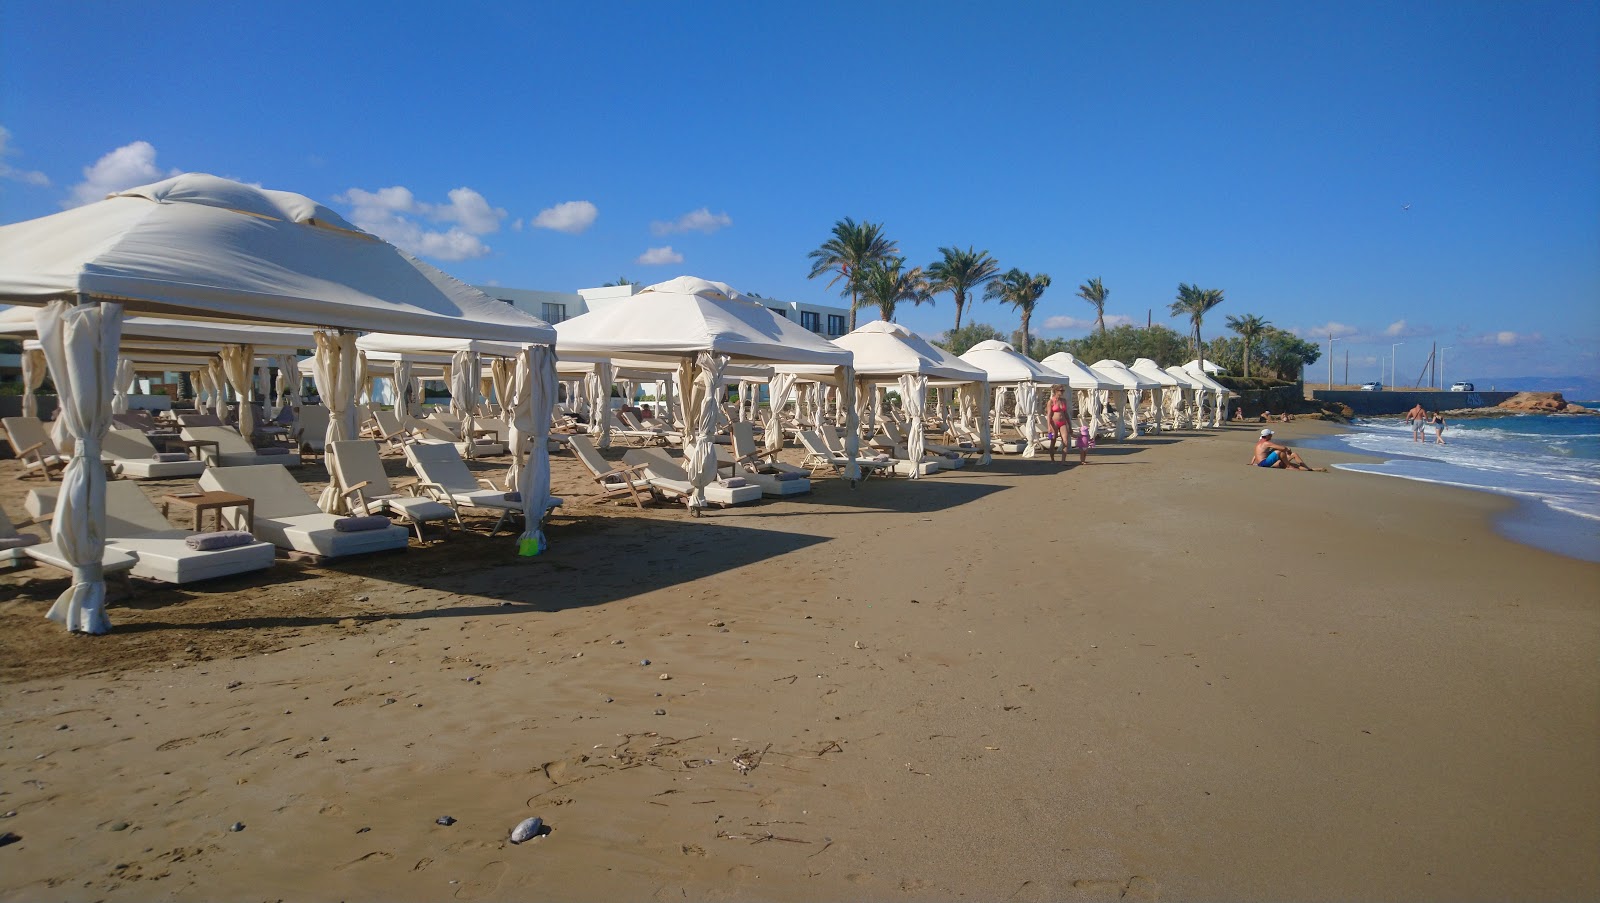 Foto av Agios Pelagia beach med hög nivå av renlighet